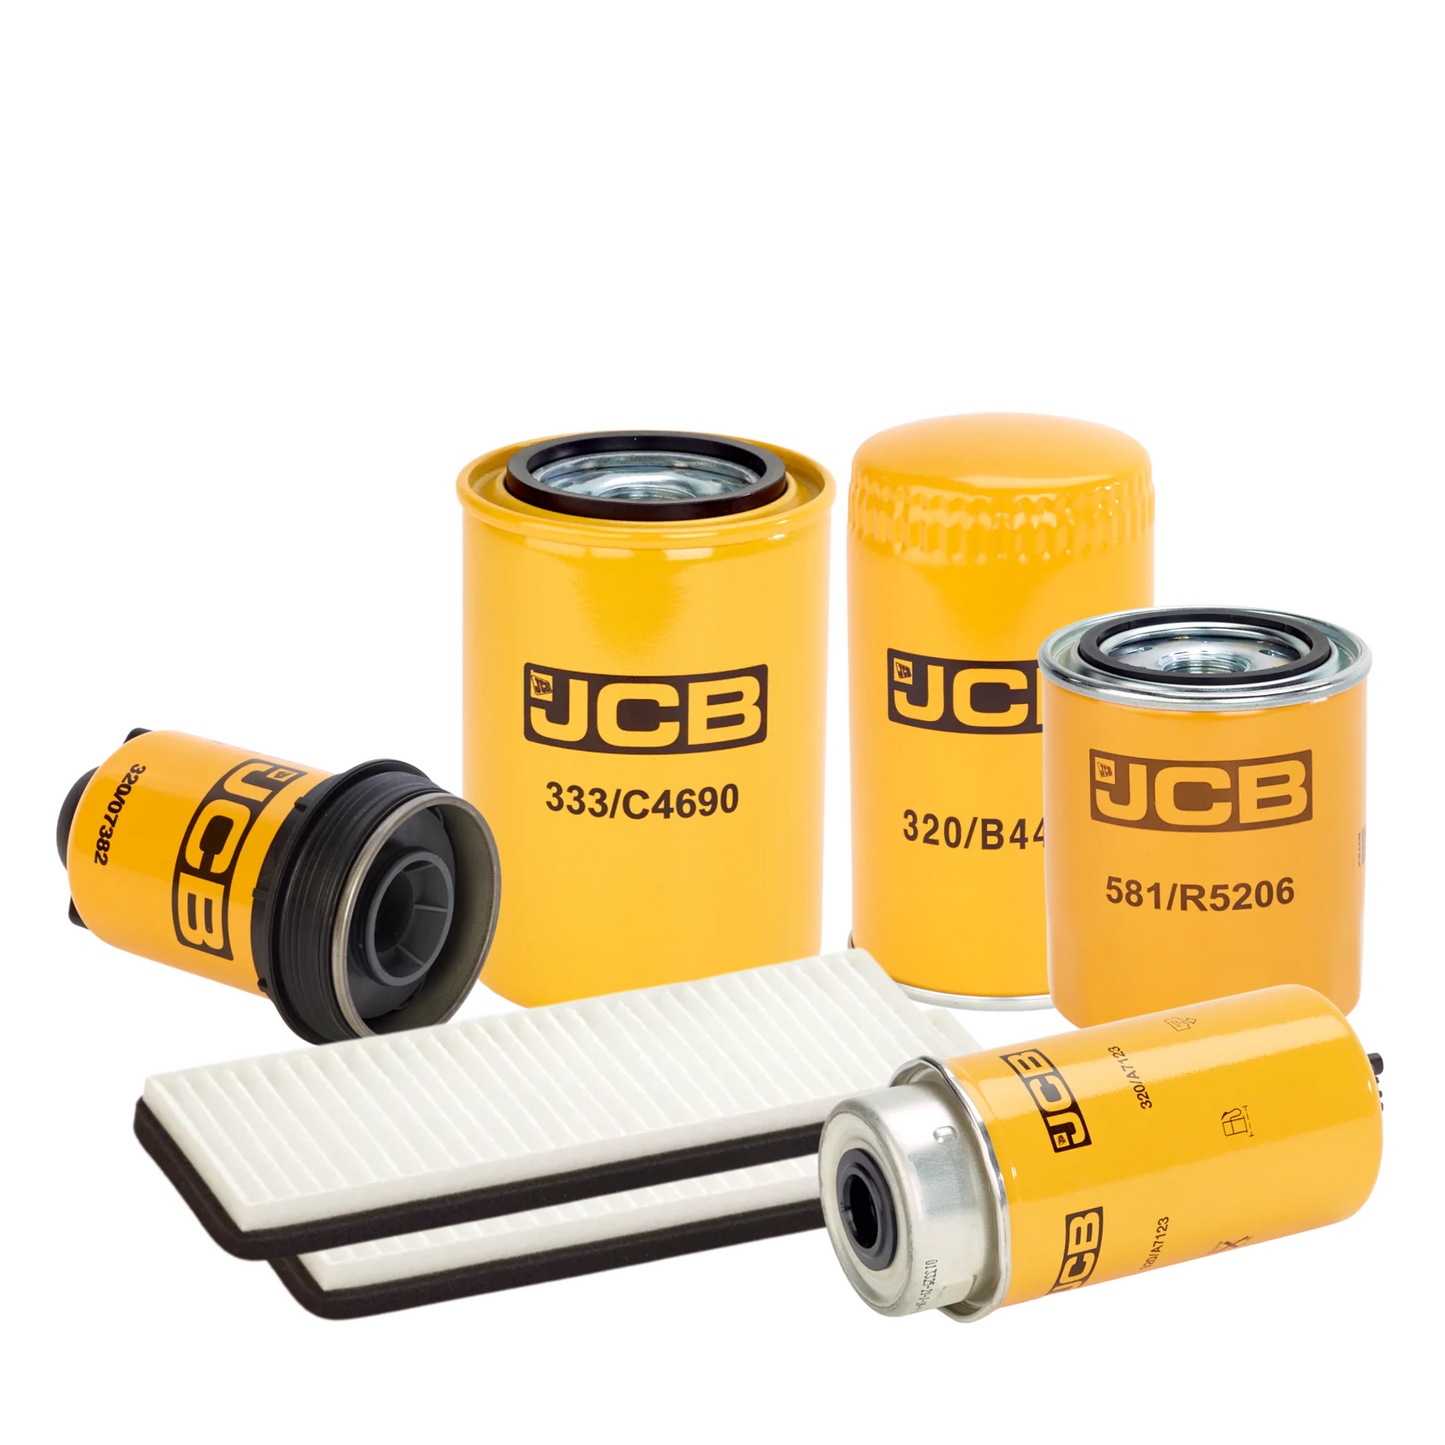 JCB 531-70 1500 Hour Filter Service Kit